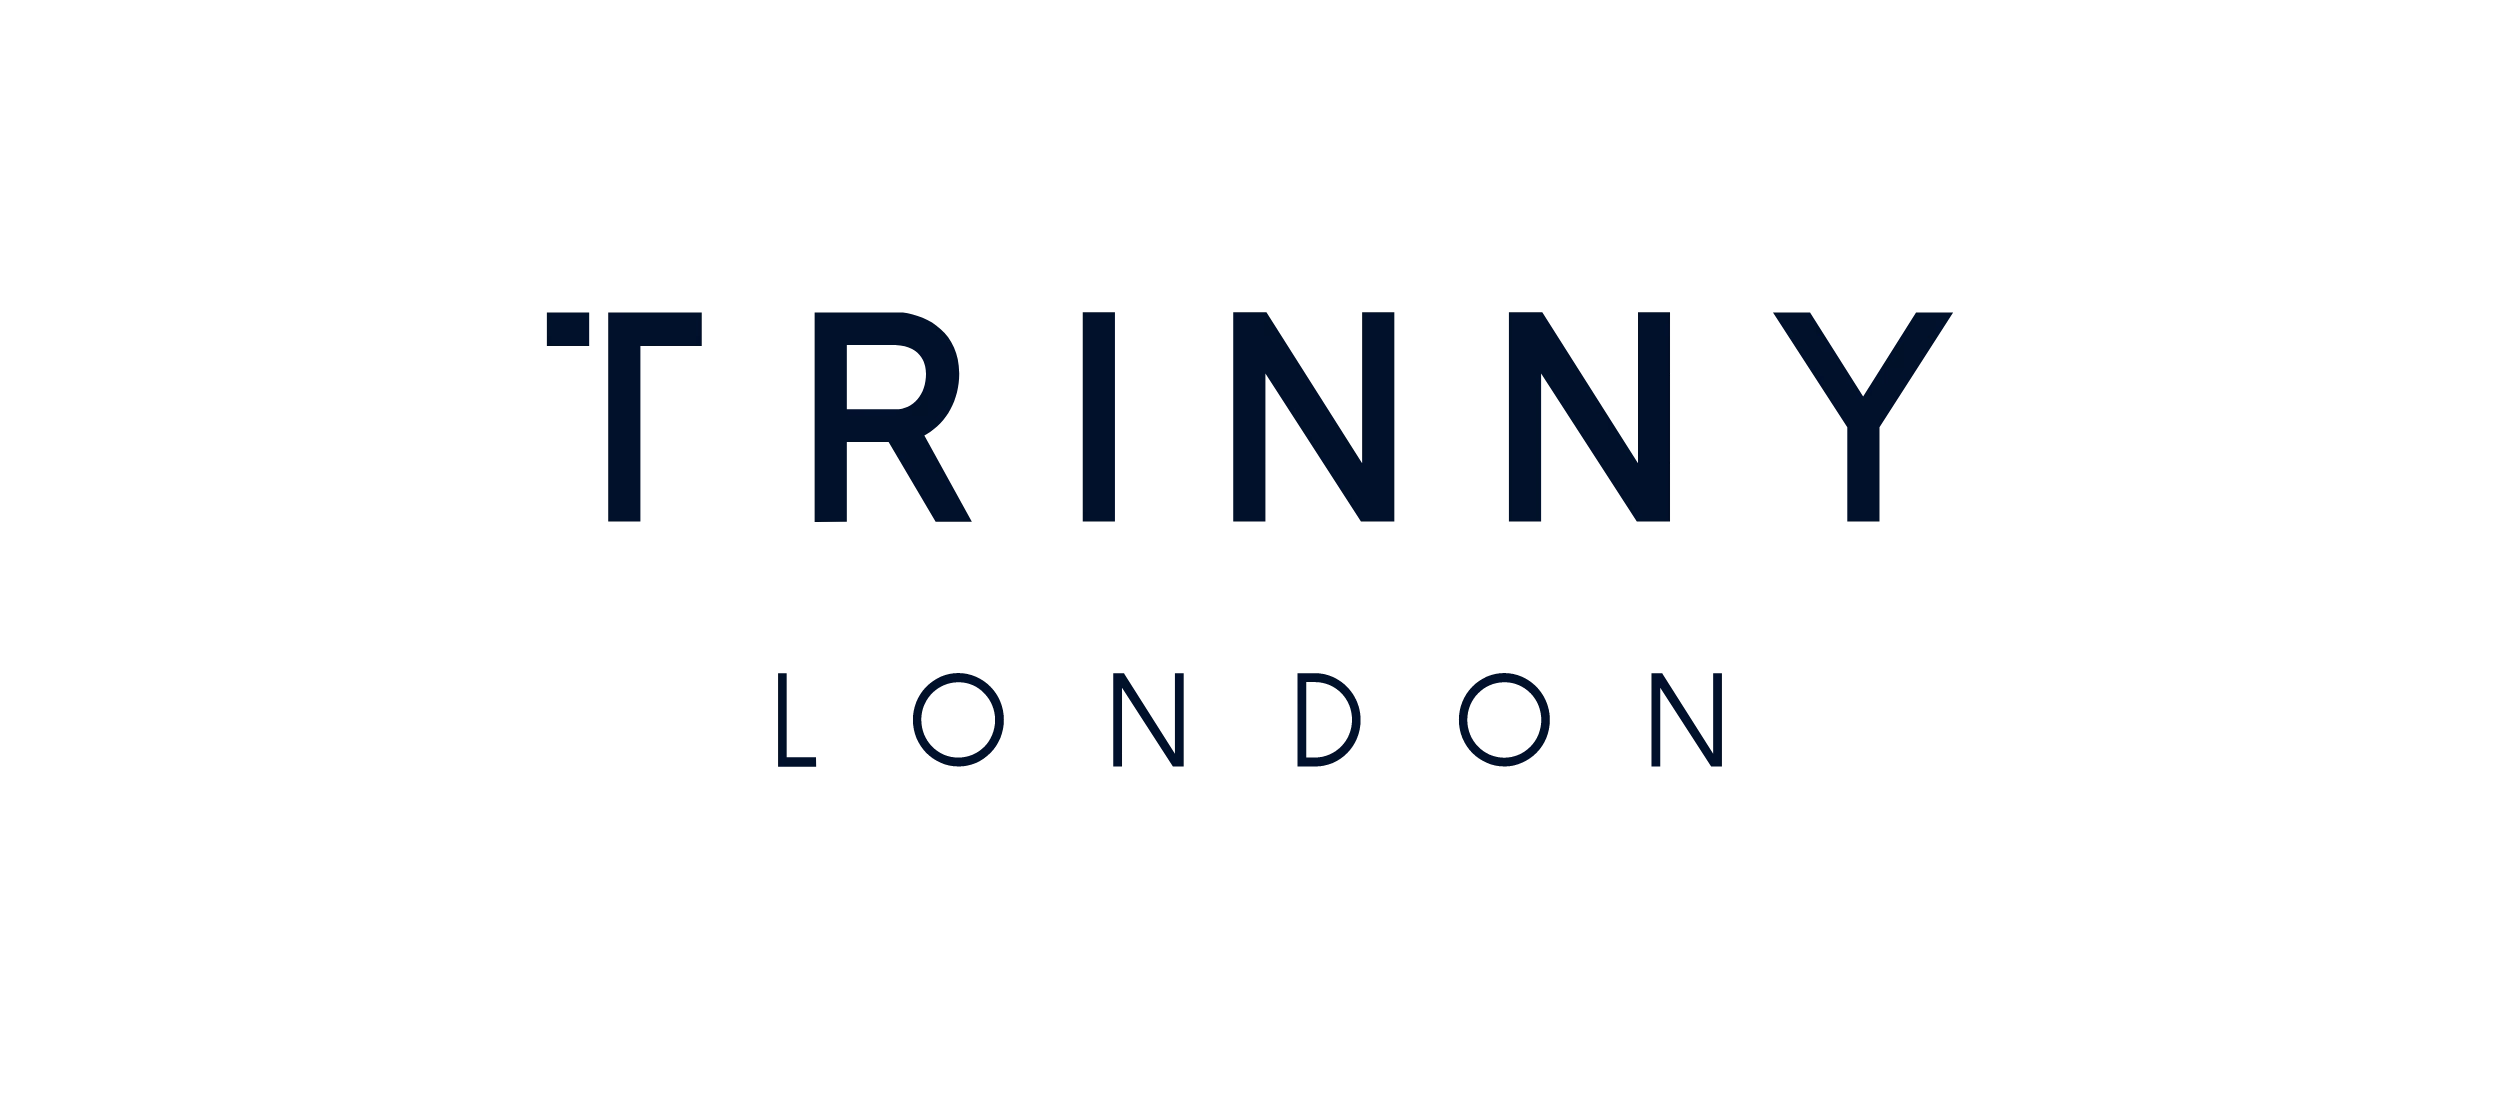 Trinny logo